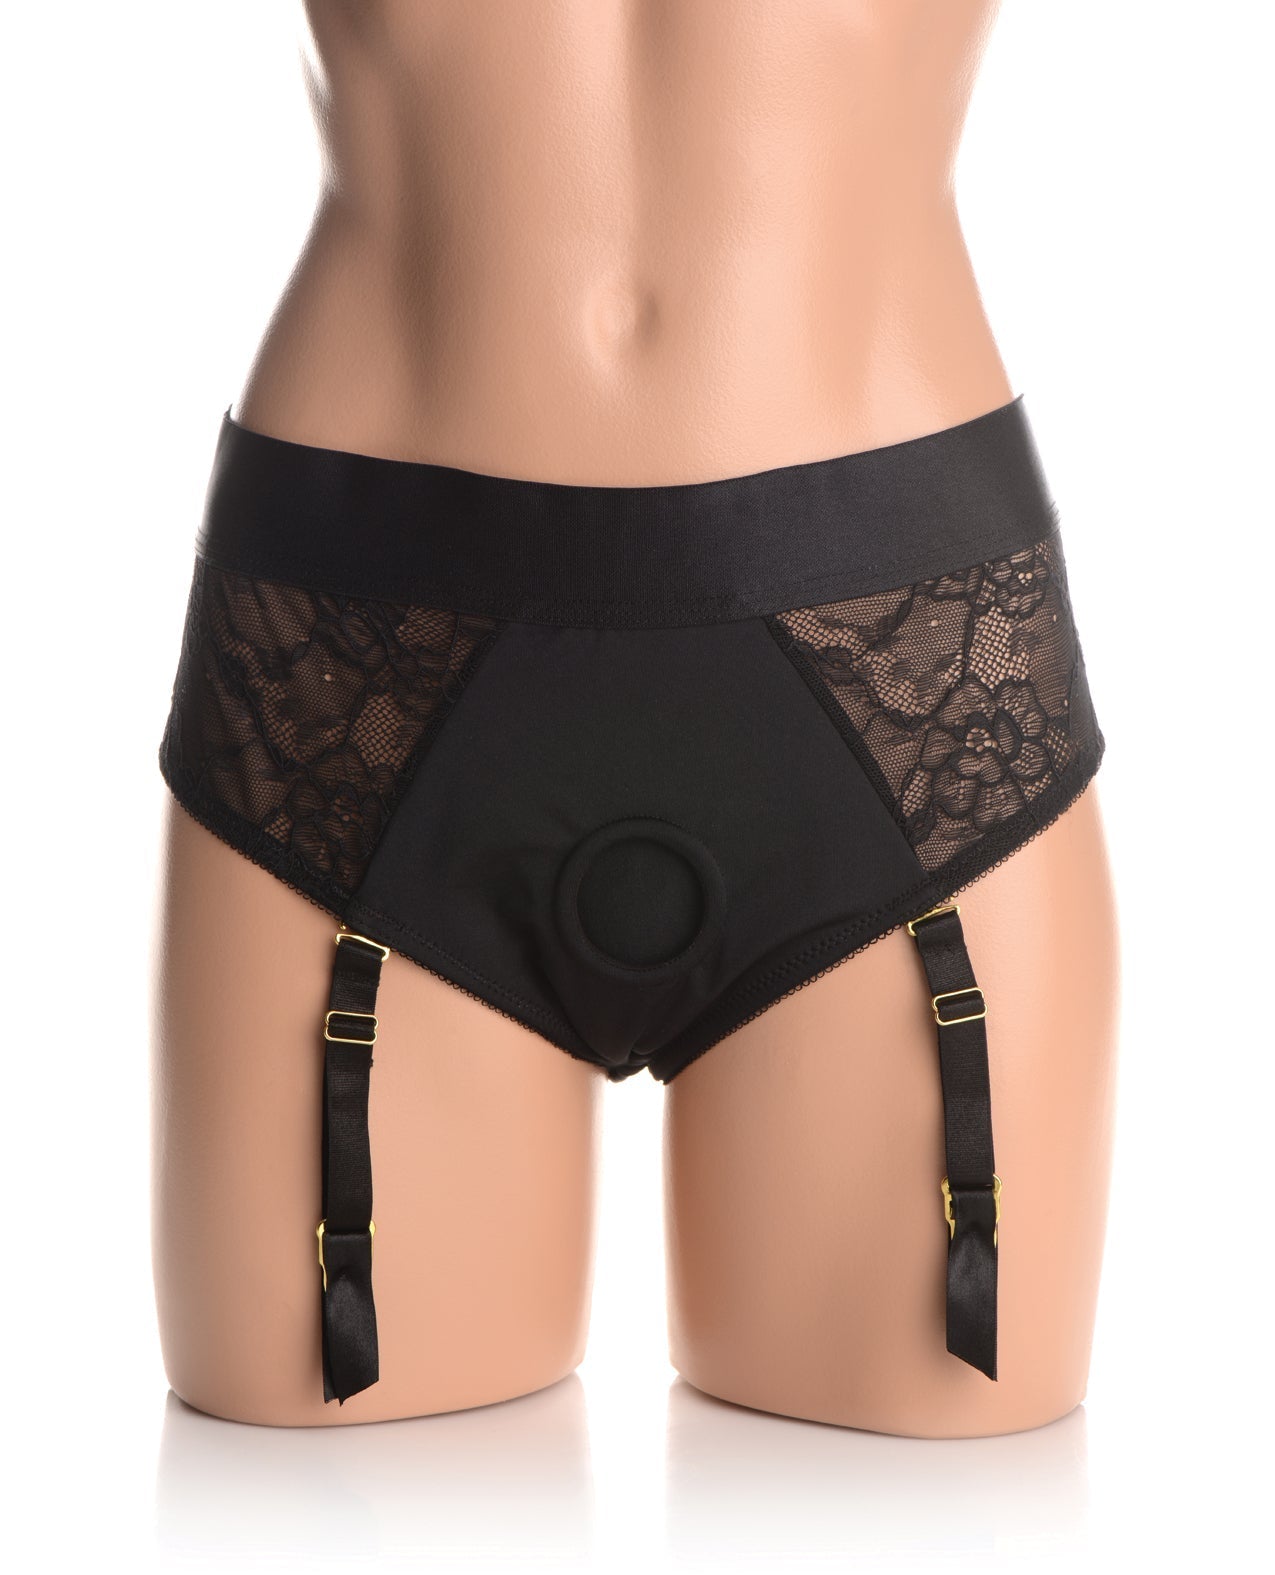 Strap U Laced Seductress Lace Crotchless Panty Harness w/Garter Straps - S/M Black